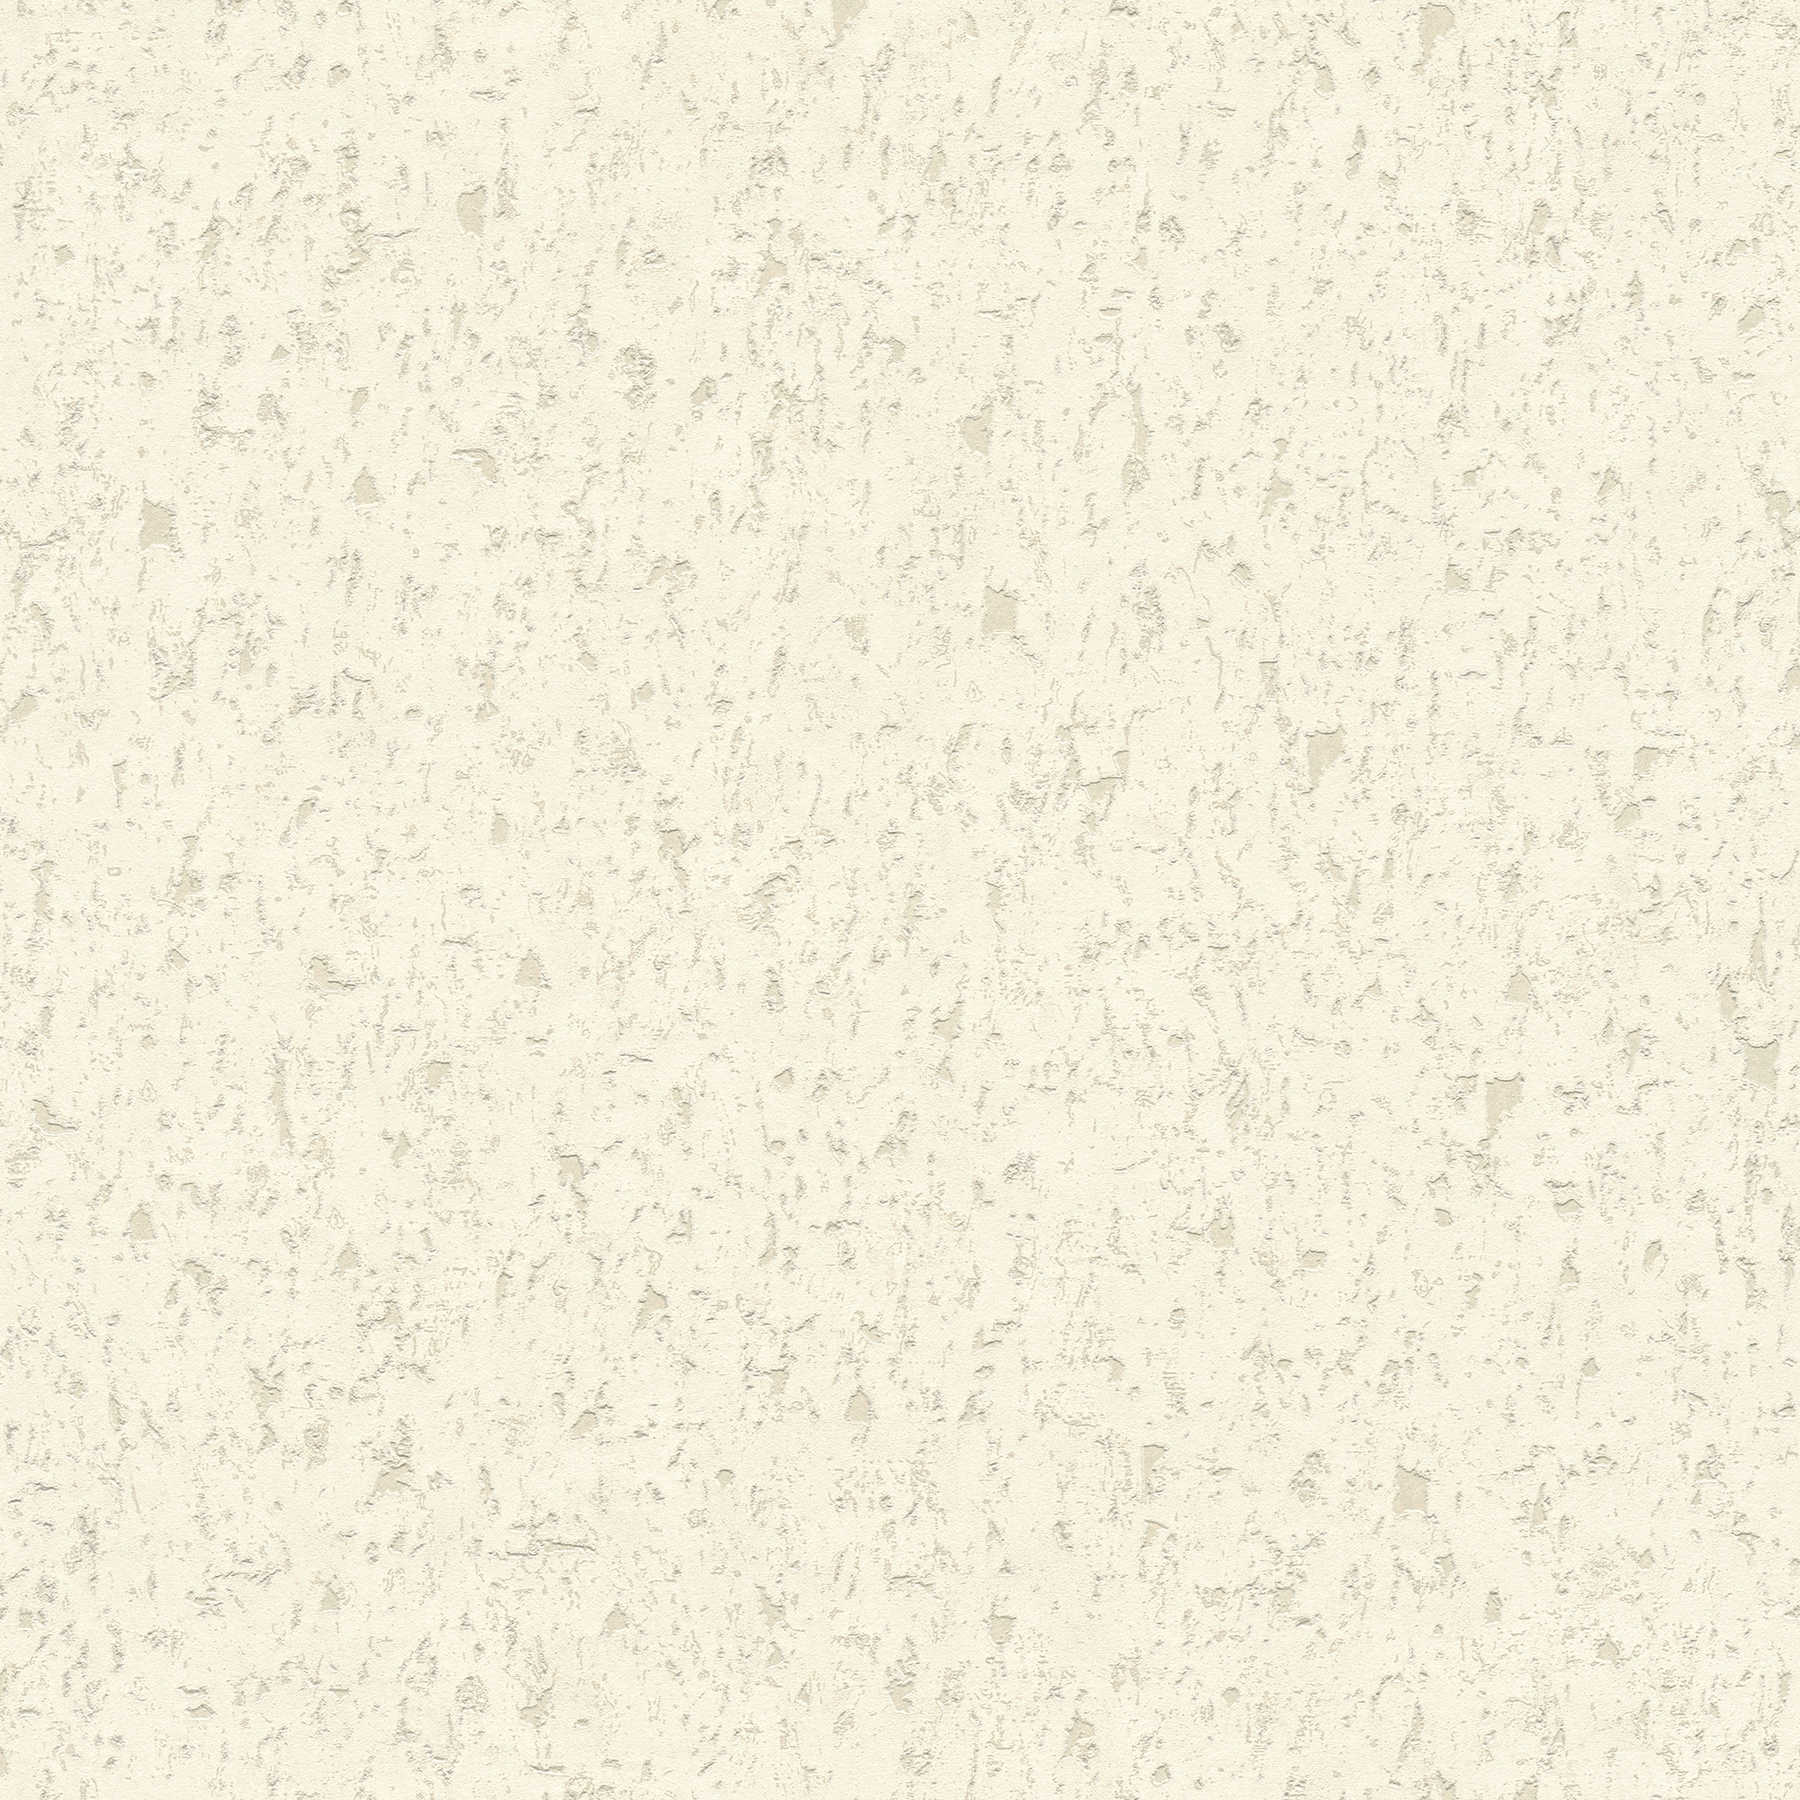 Non-woven wallpaper cork look with metallic effect - grey, white
